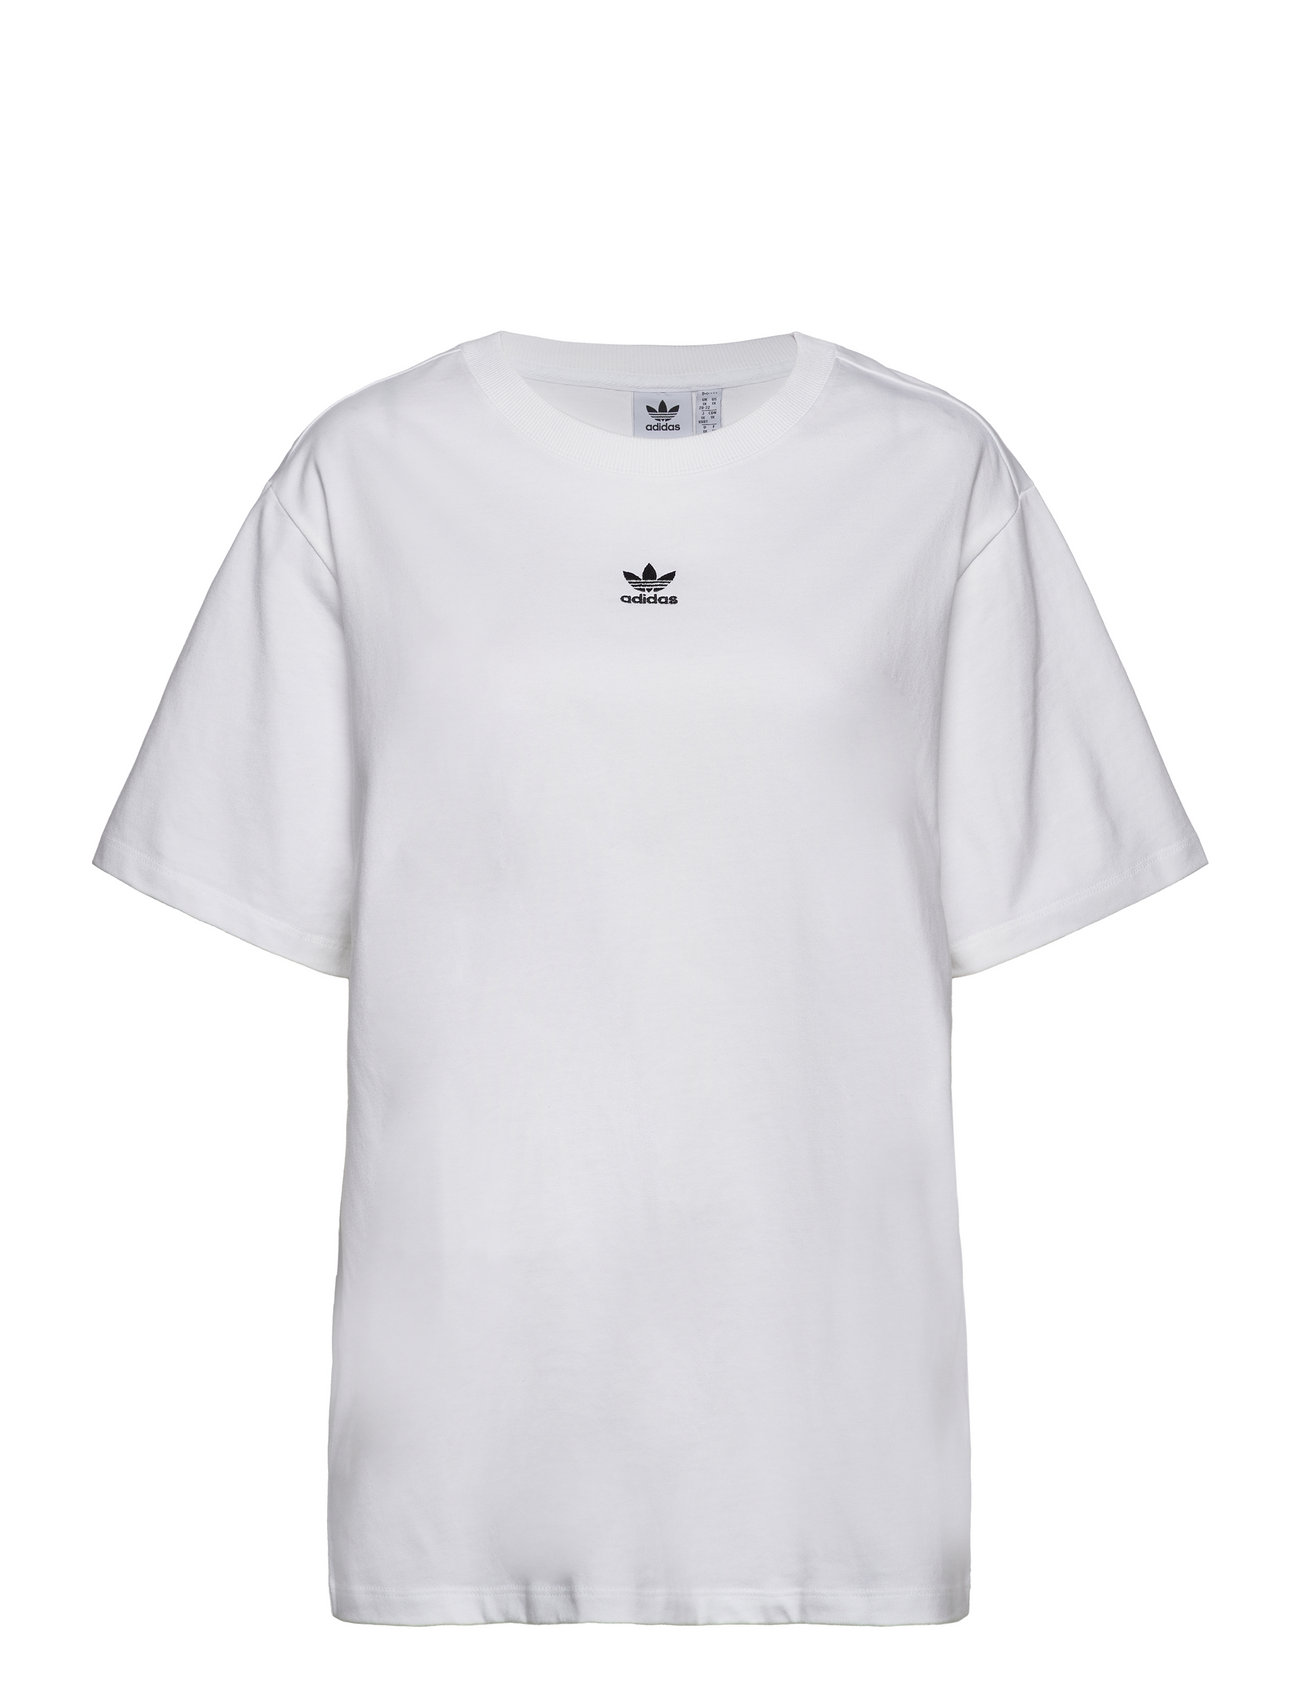 Regular Tshirt Sport T-shirts & Tops Short-sleeved White Adidas Originals